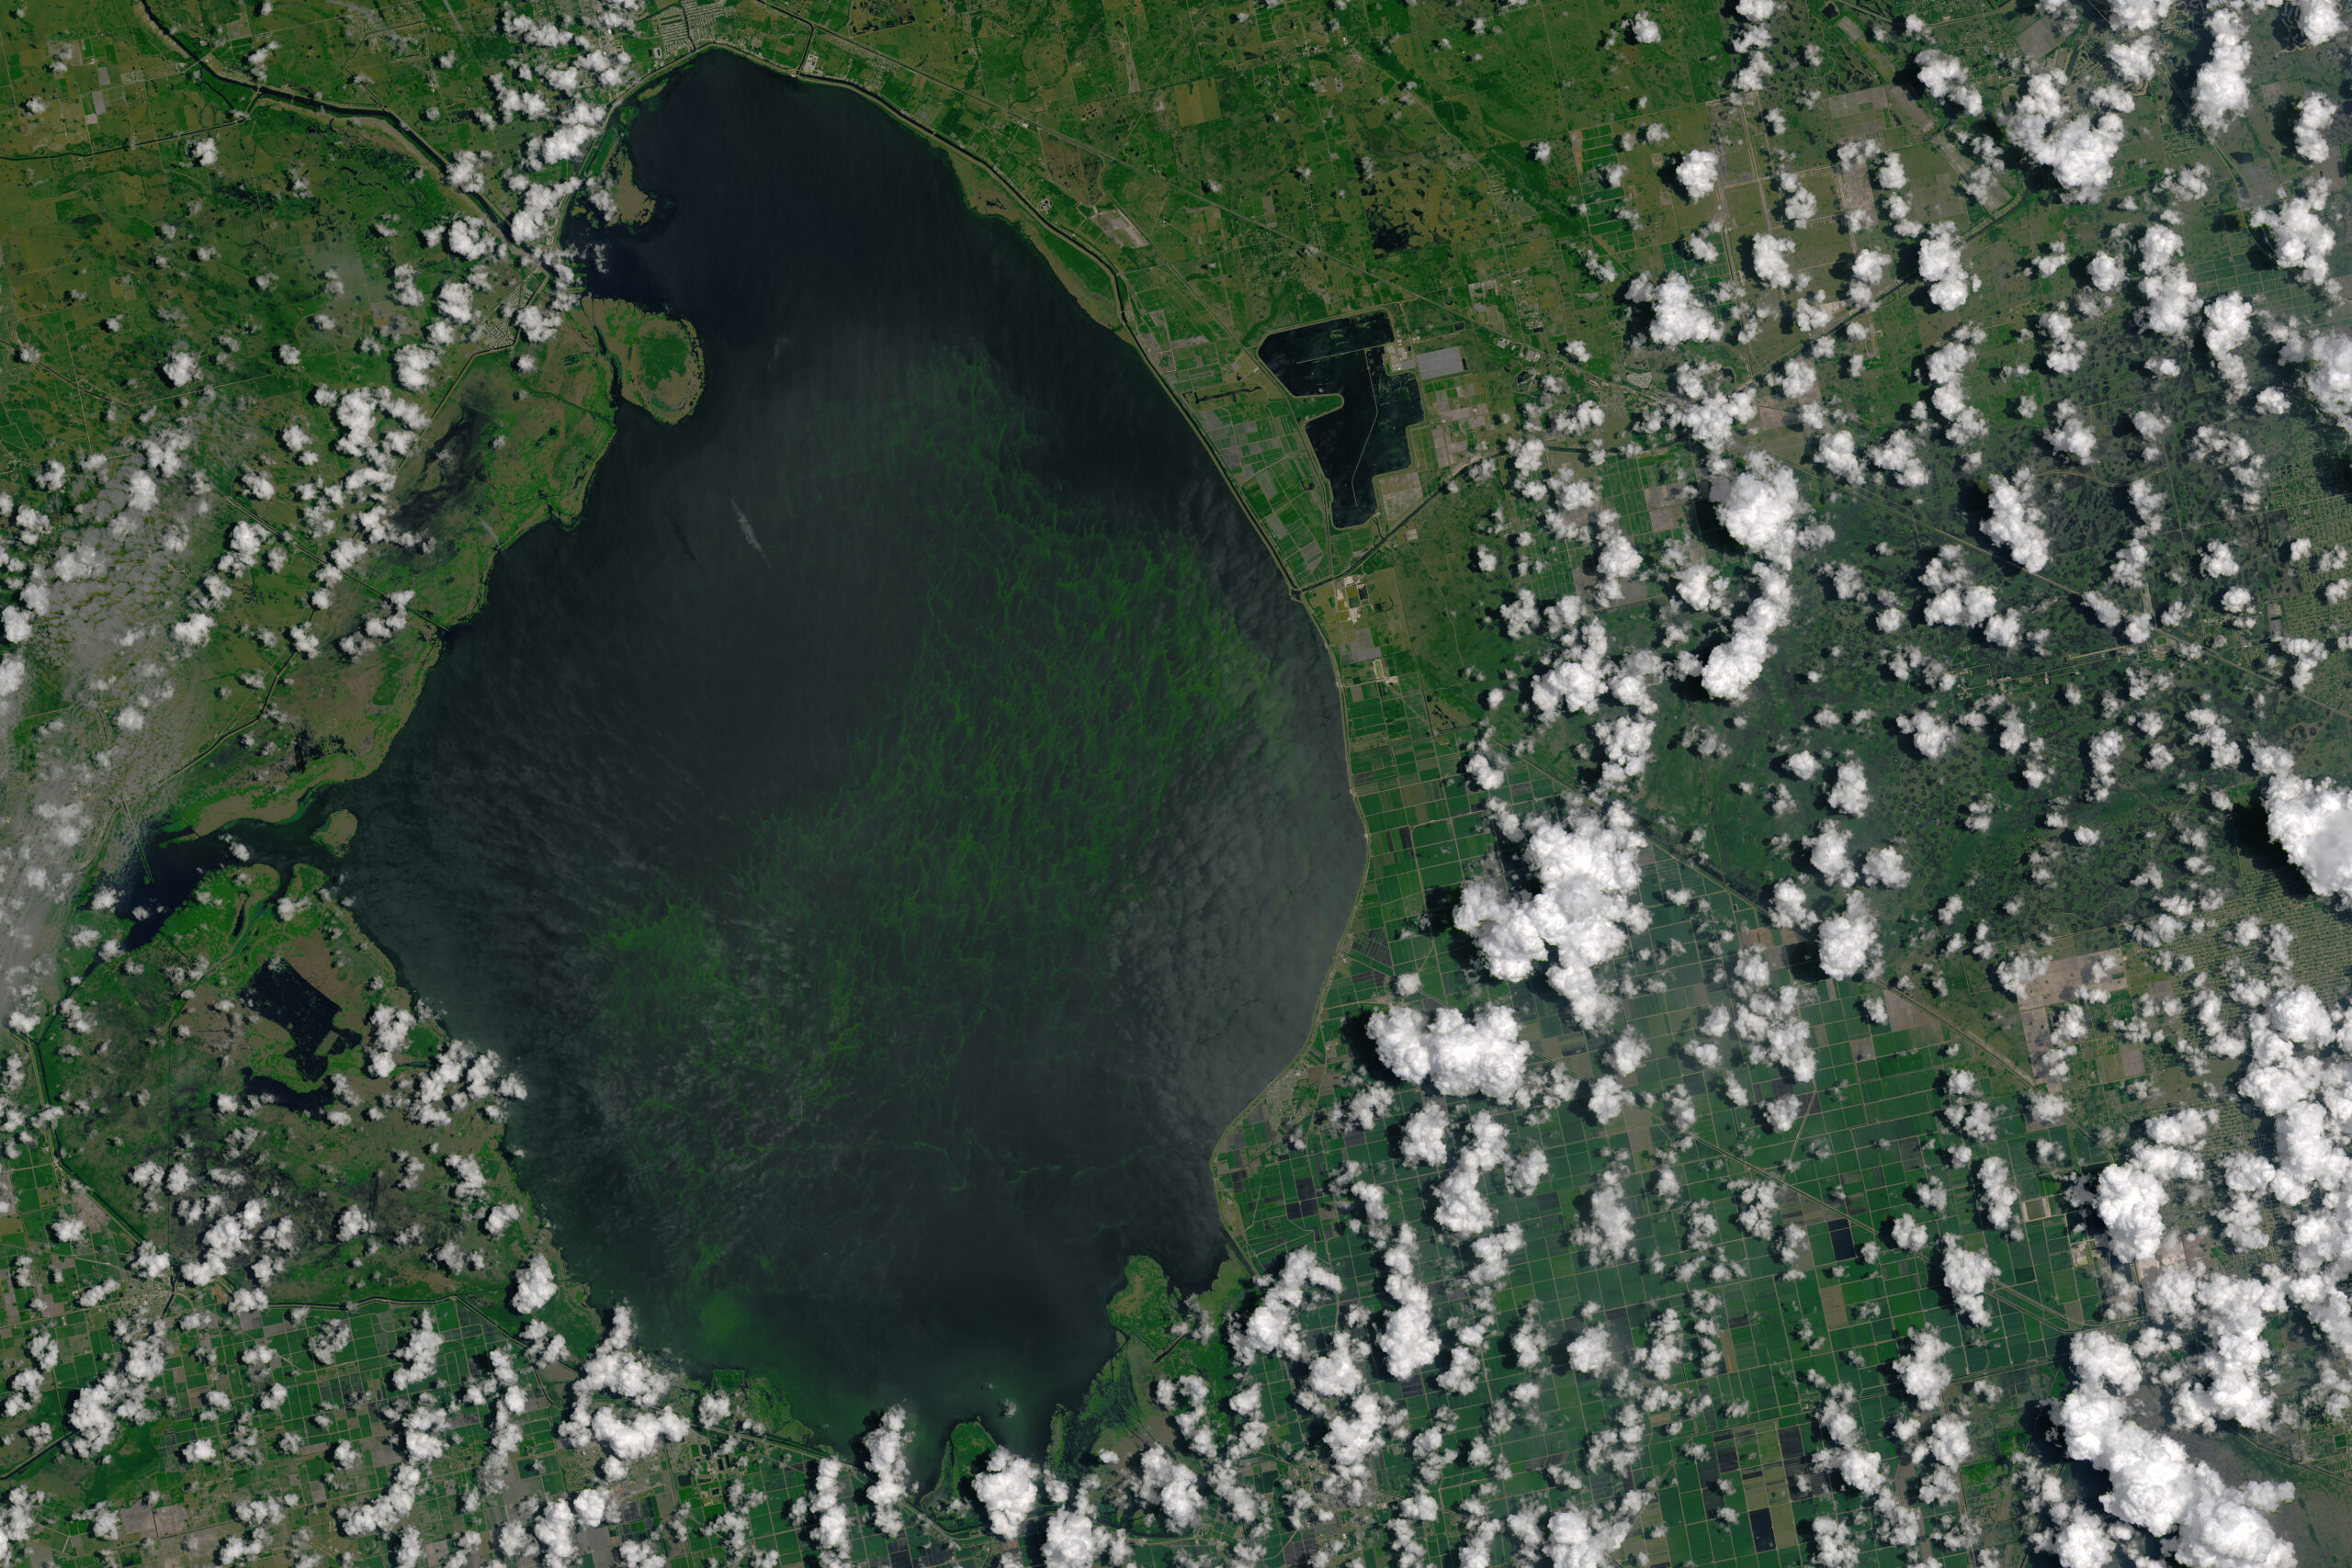 New Satellite Images Show Extent Of Florida Algal Bloom